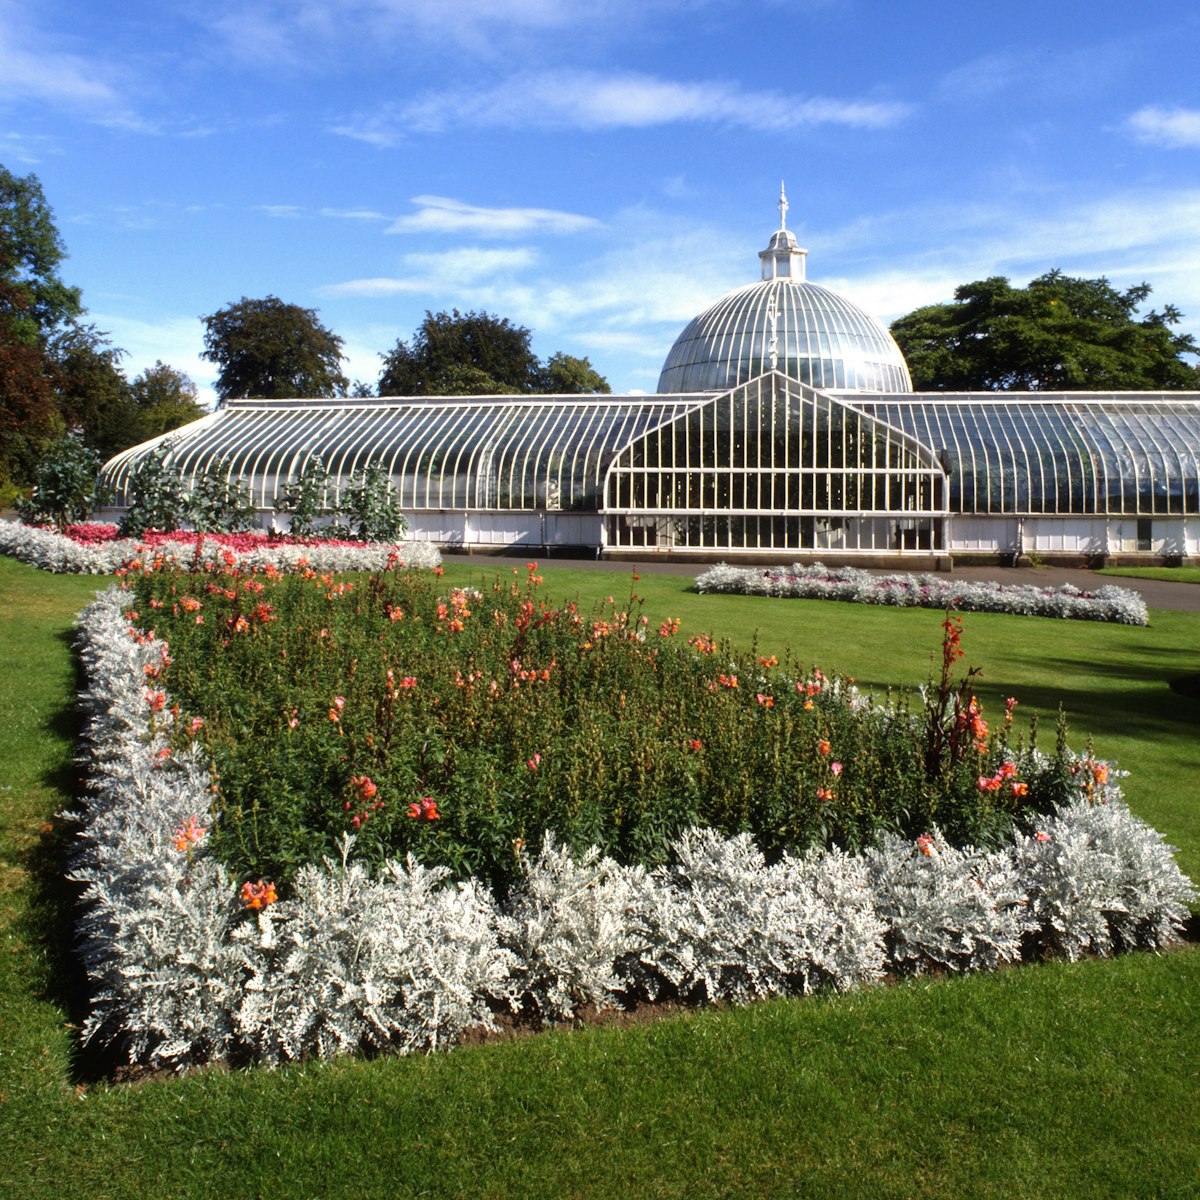 Glasgow Botanic Gardens and Kibble Palace, Glasgow, Scotland, United Kingdom. (Photo by: UIG via Getty Images)